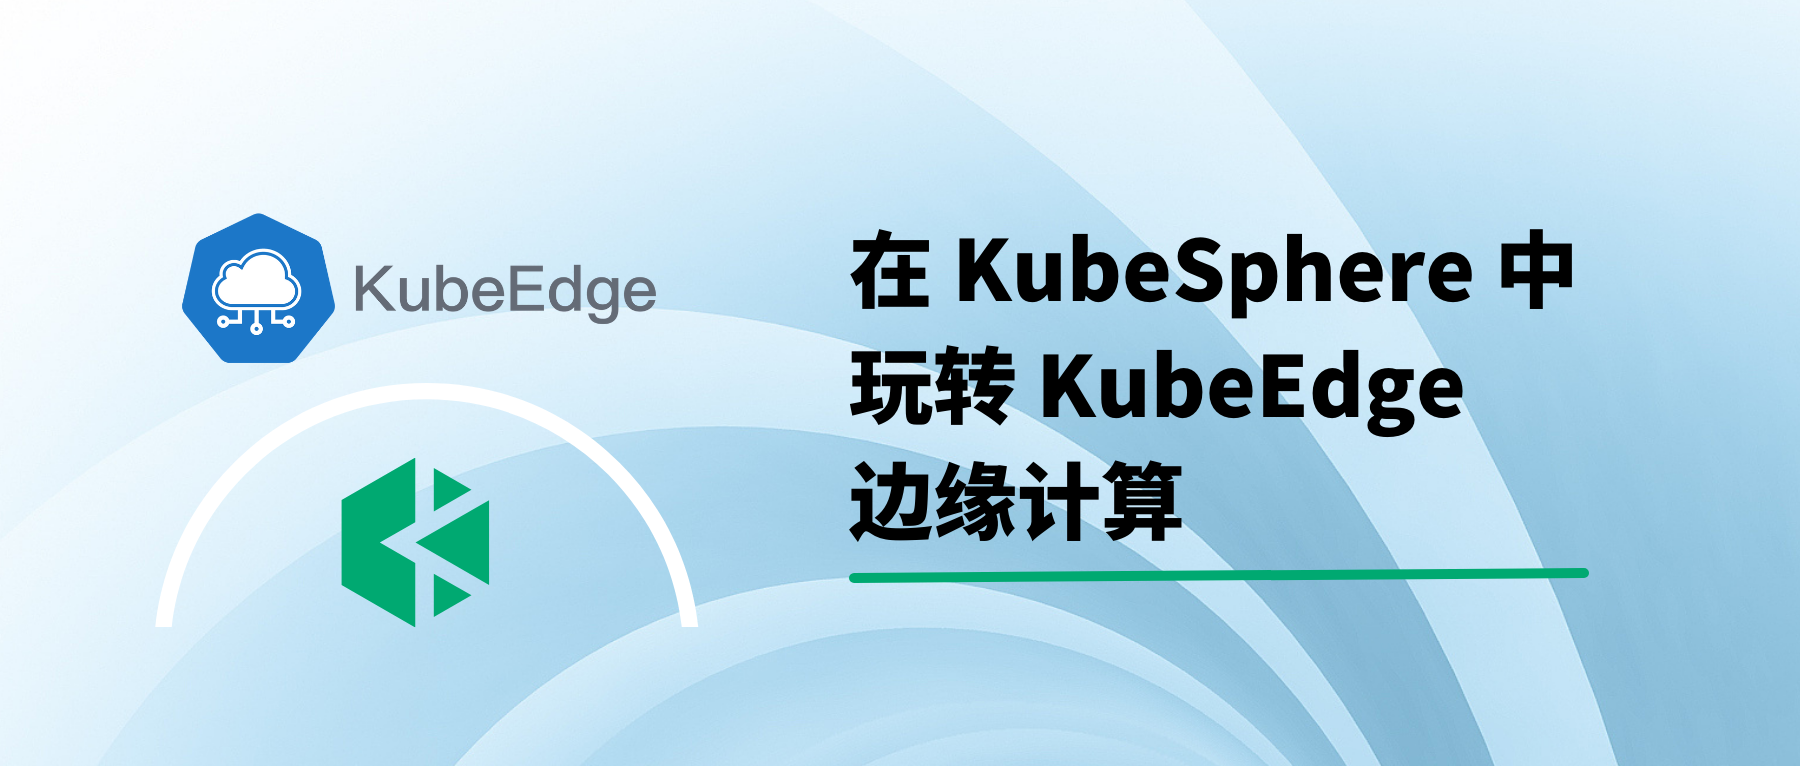 在 Kubernetes 中部署并使用 KubeEdge